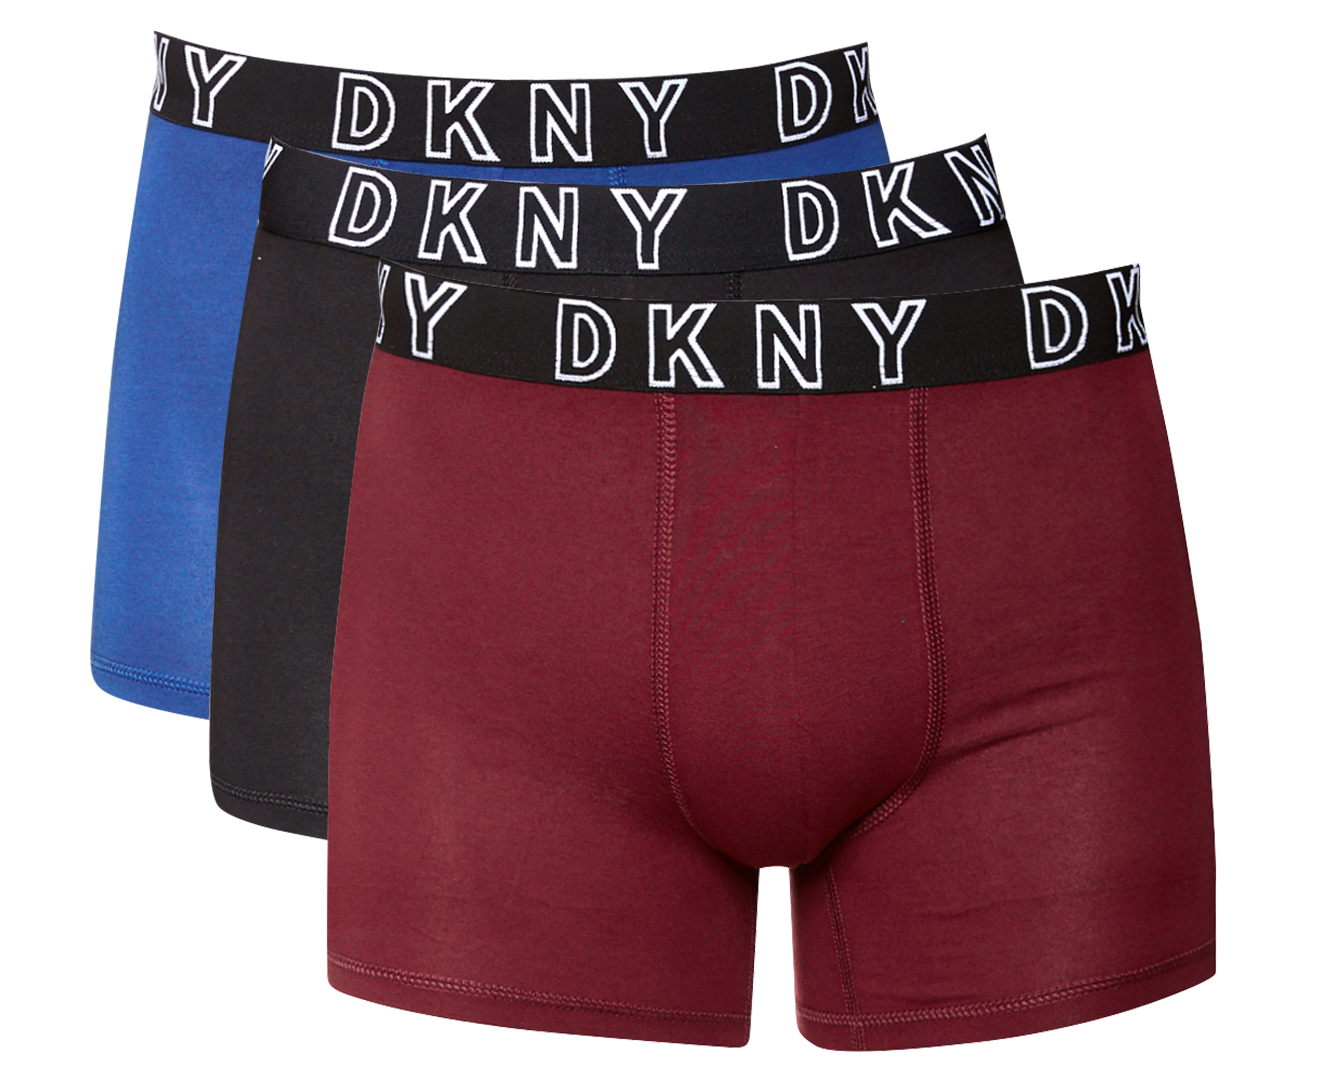 DKNY Men's Stretch Sport Boxer Brief 3-Pack - Black/Blue/Burgundy ...